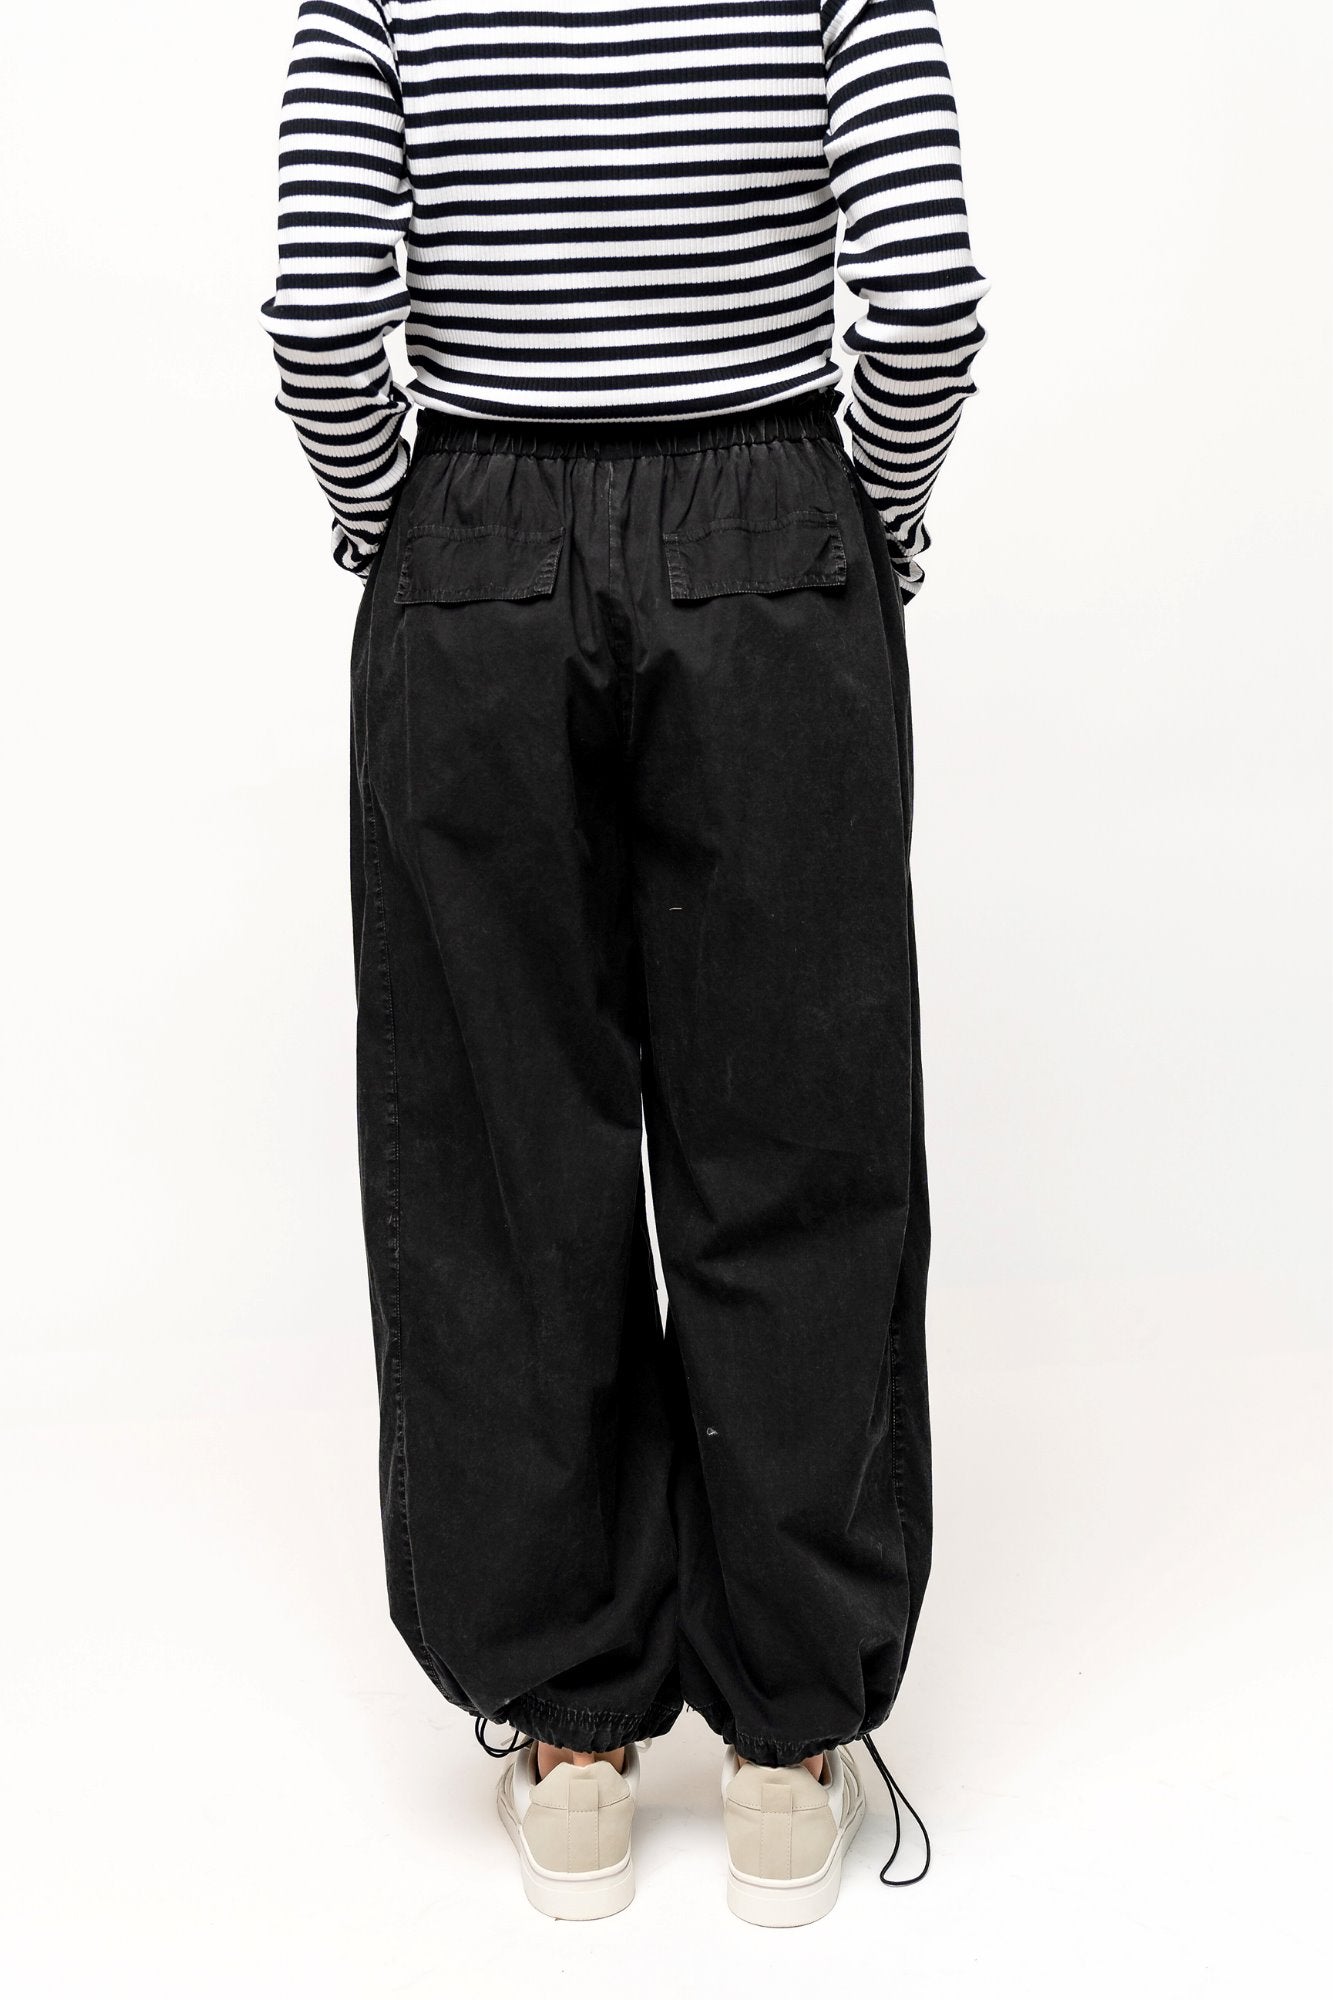 Jenner Pants in Black Holley Girl 